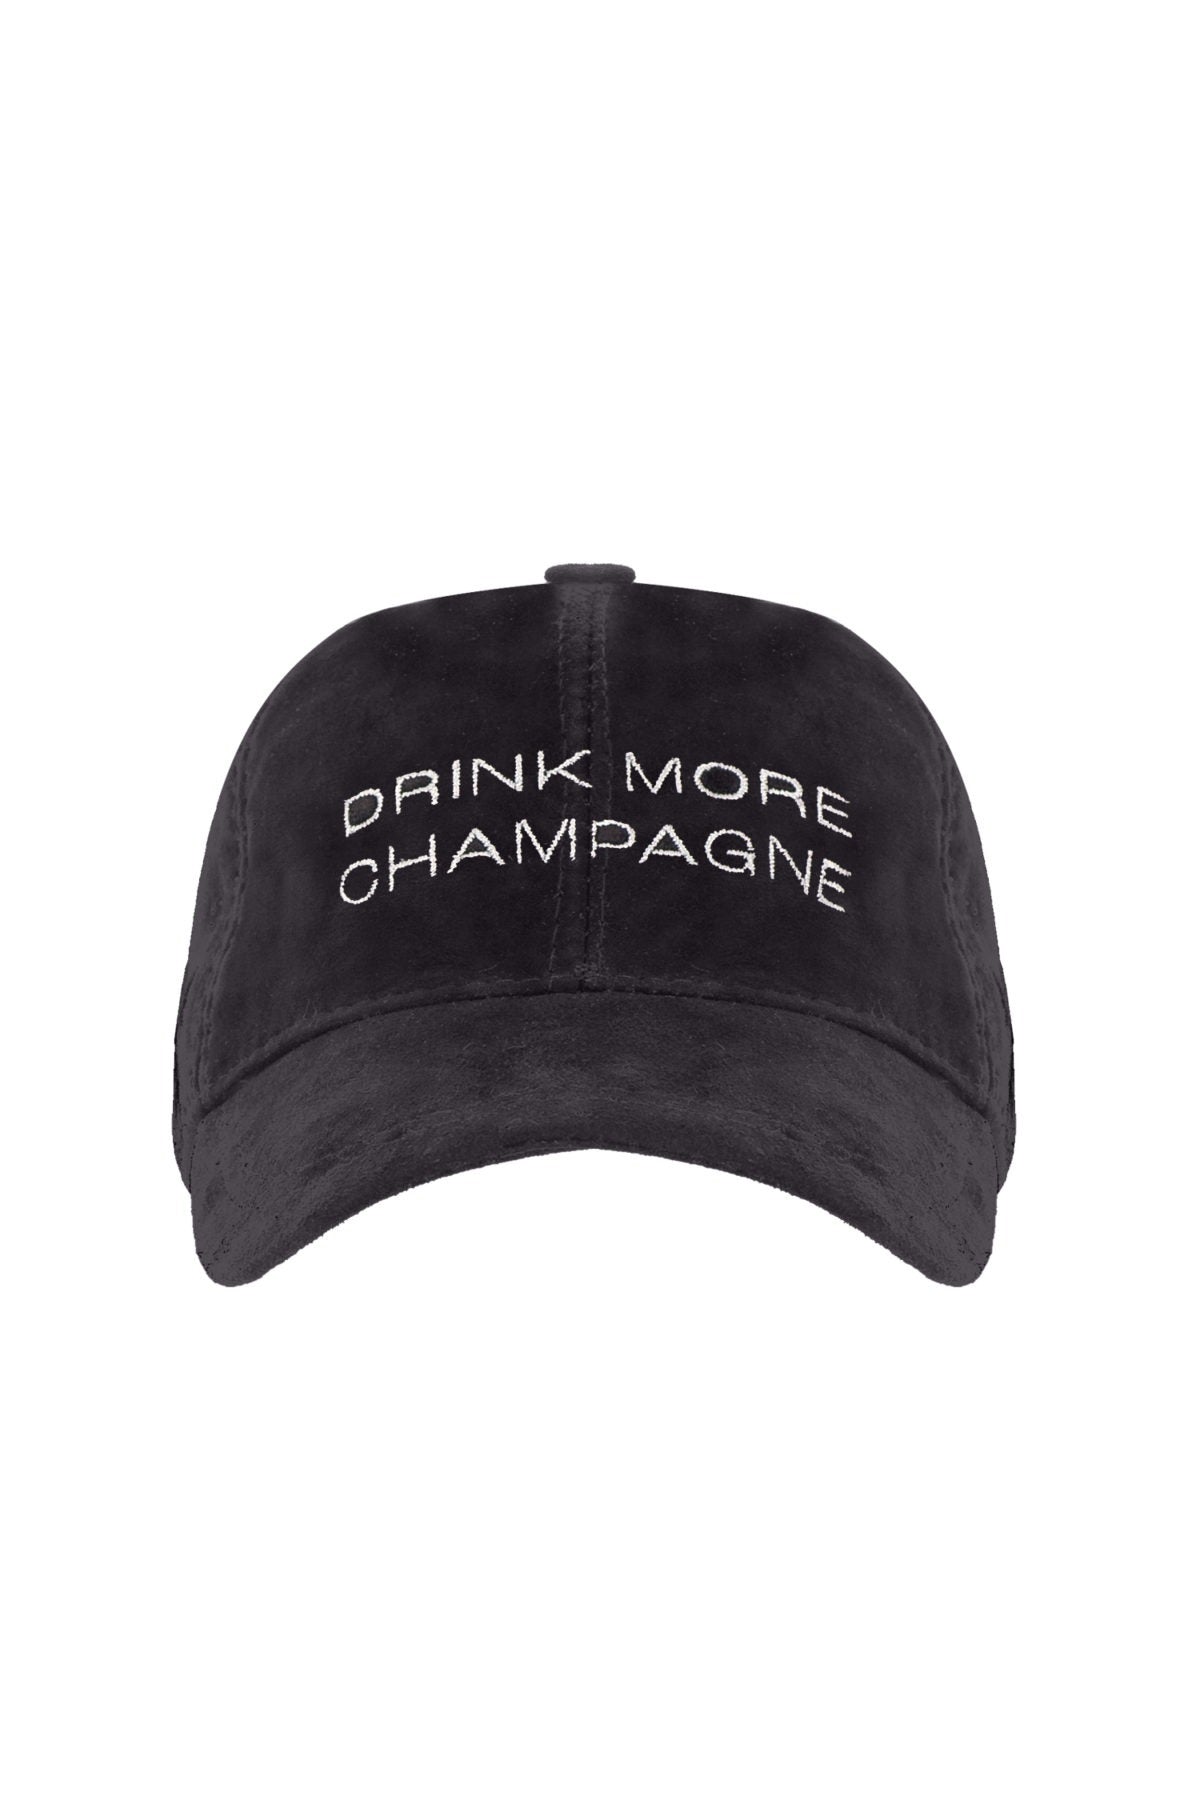 Drink More Champagne - Black